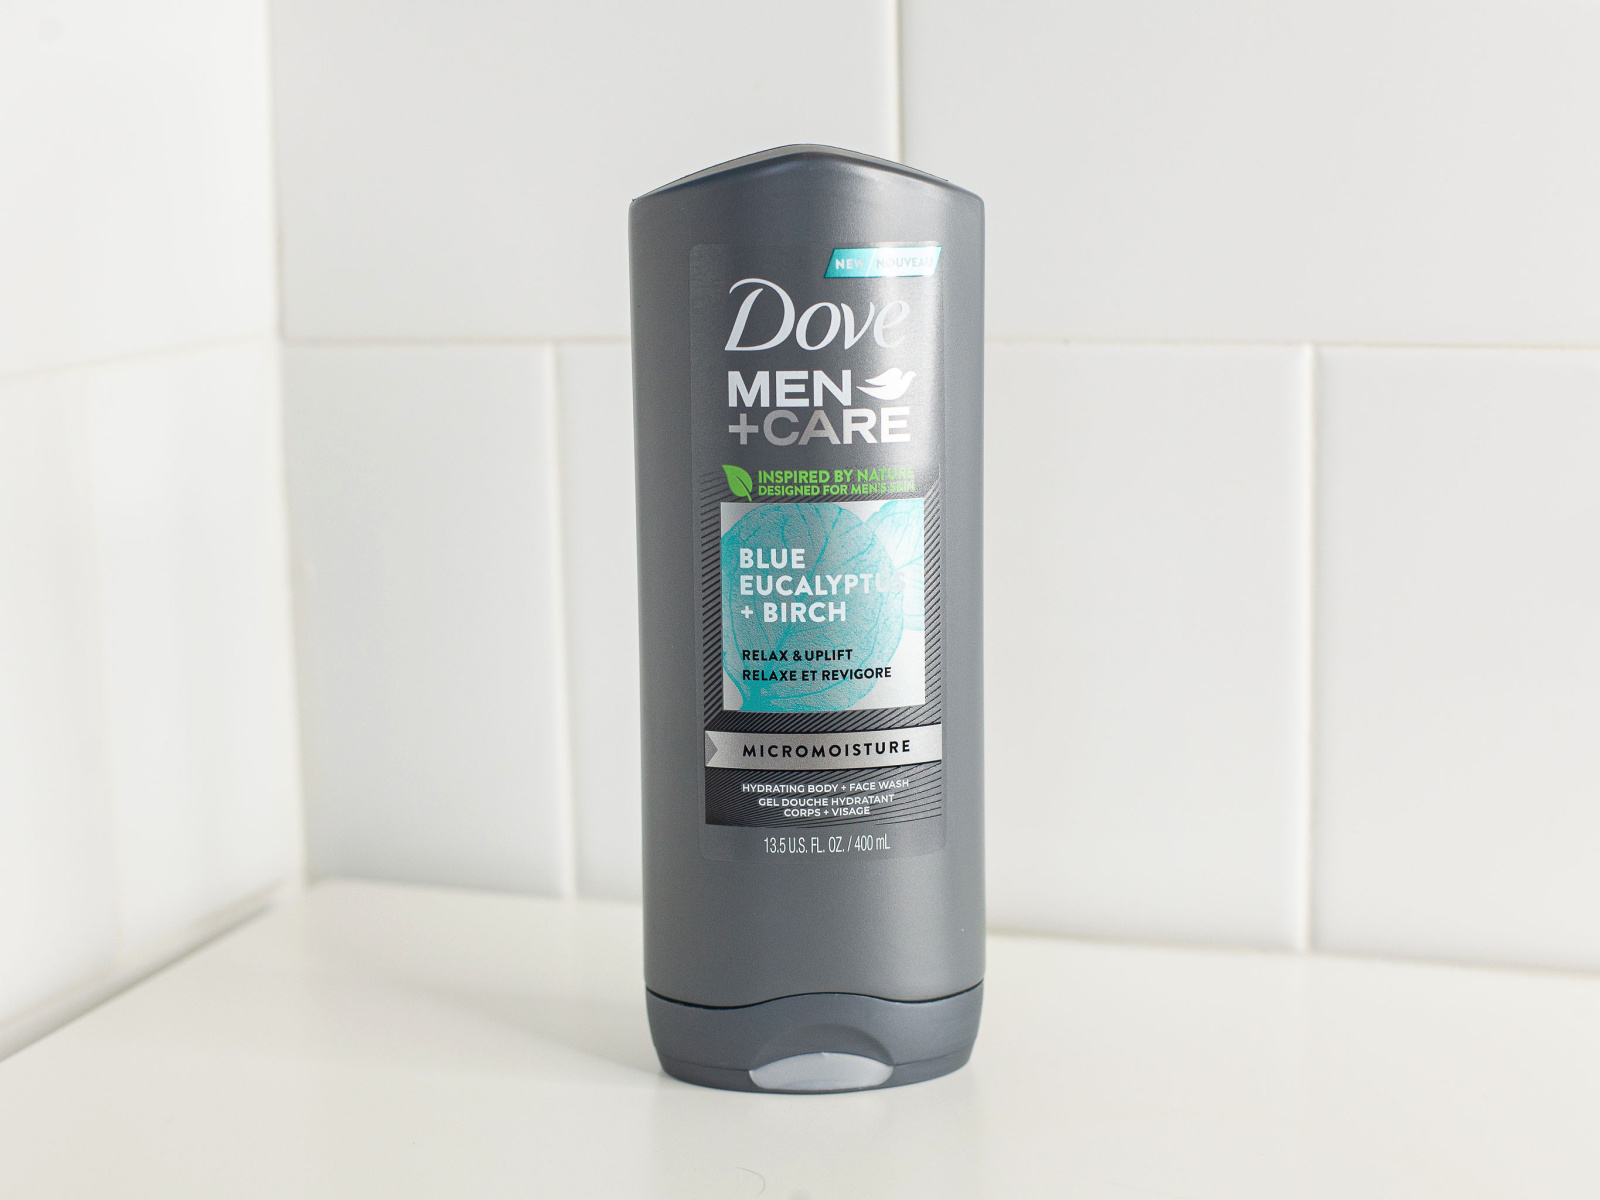 Dove Men+Care Body Wash Just $1.59 At Publix – Ends Soon